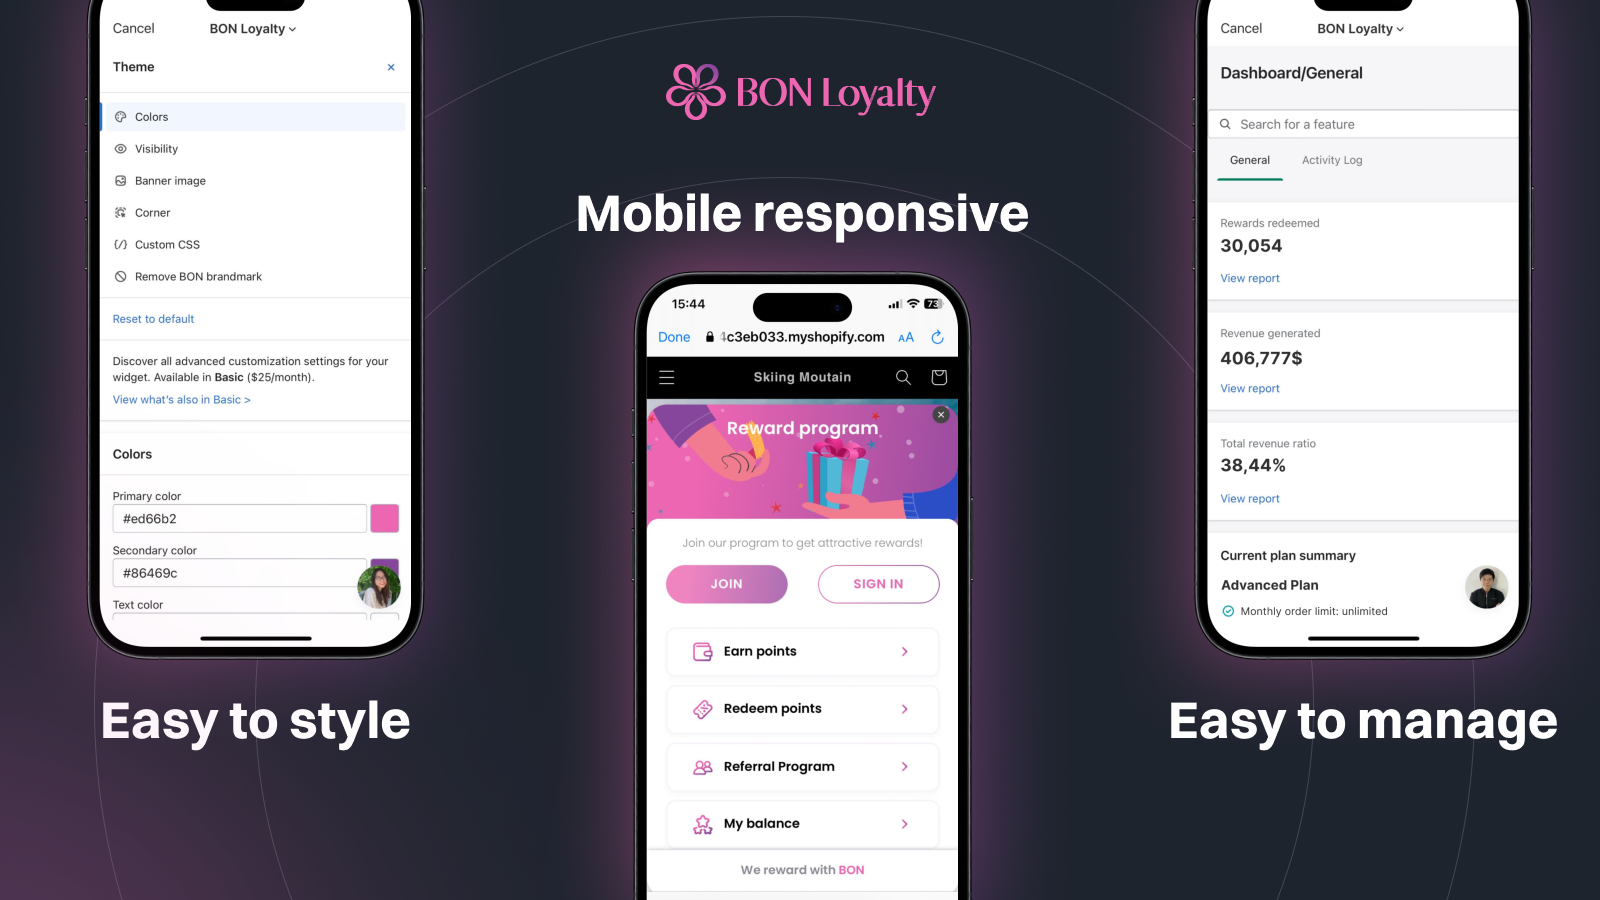 BON Loyalty offre une interface mobile responsive